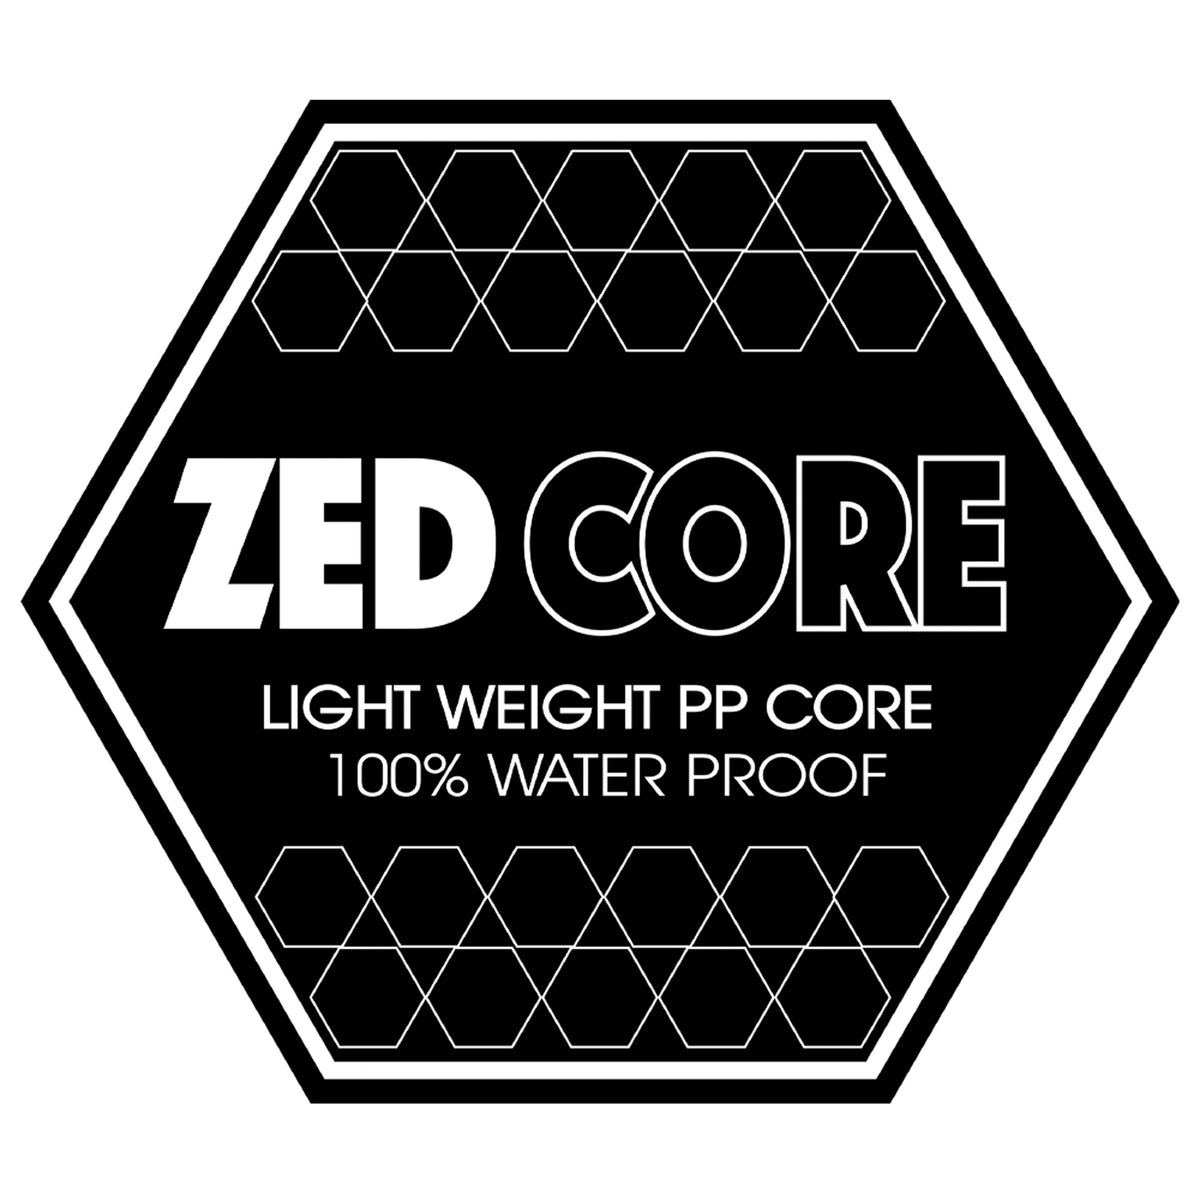 Rogue - ZED Core - Nomad Bodyboards